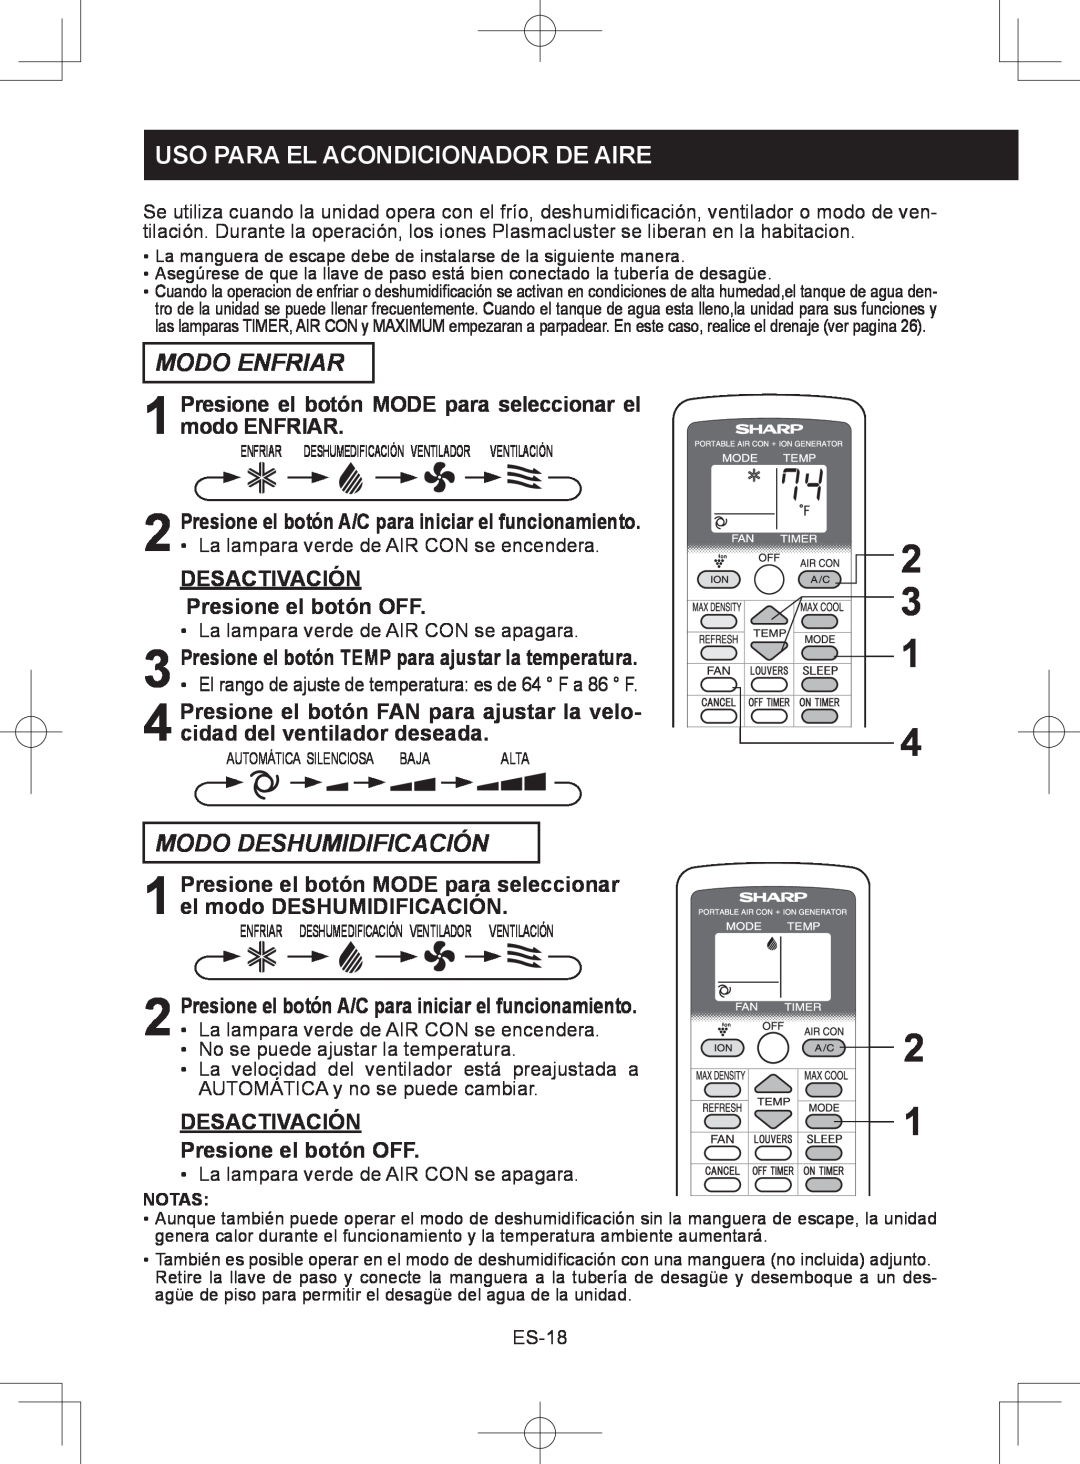 Sharp CV-2P10SC operation manual 2 3, Uso Para El Acondicionador De Aire, Modo Enfriar, Modo Deshumidificación 